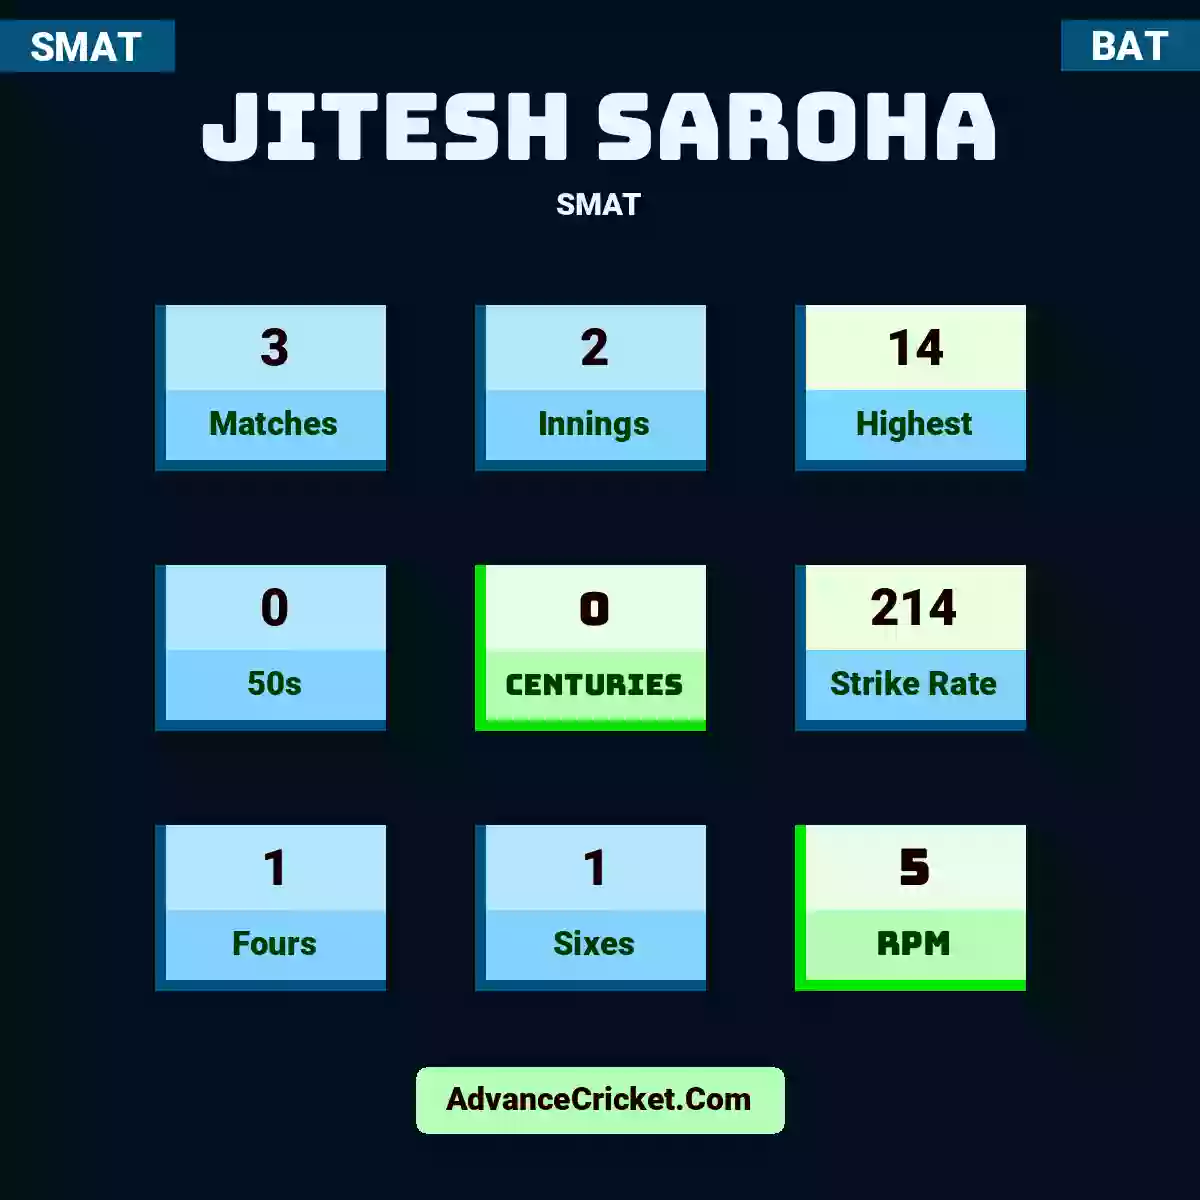 Jitesh Saroha SMAT , Jitesh Saroha played 3 matches, scored 14 runs as highest, 0 half-centuries, and 0 centuries, with a strike rate of 214. J.Saroha hit 1 fours and 1 sixes, with an RPM of 5.